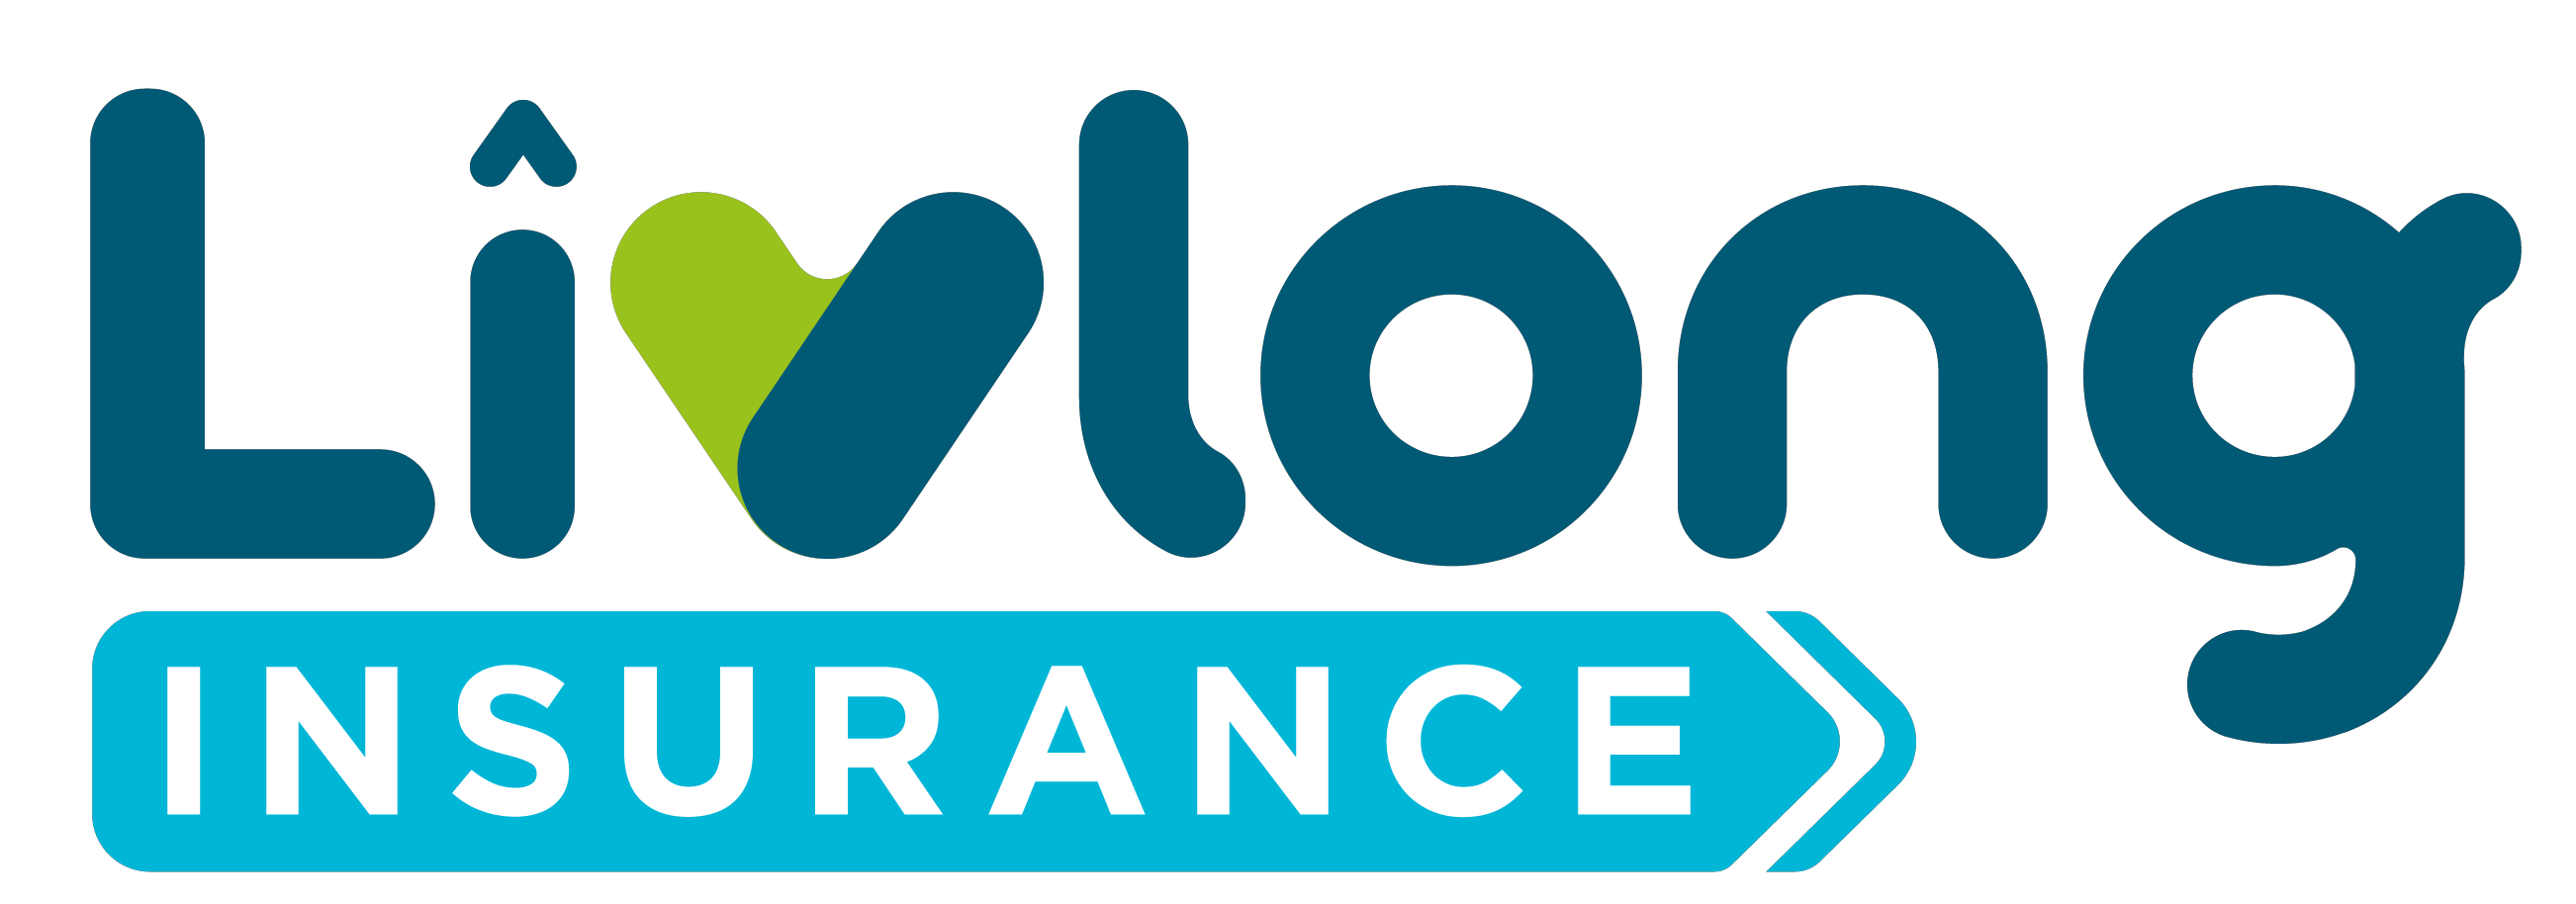 LivLong Insurance